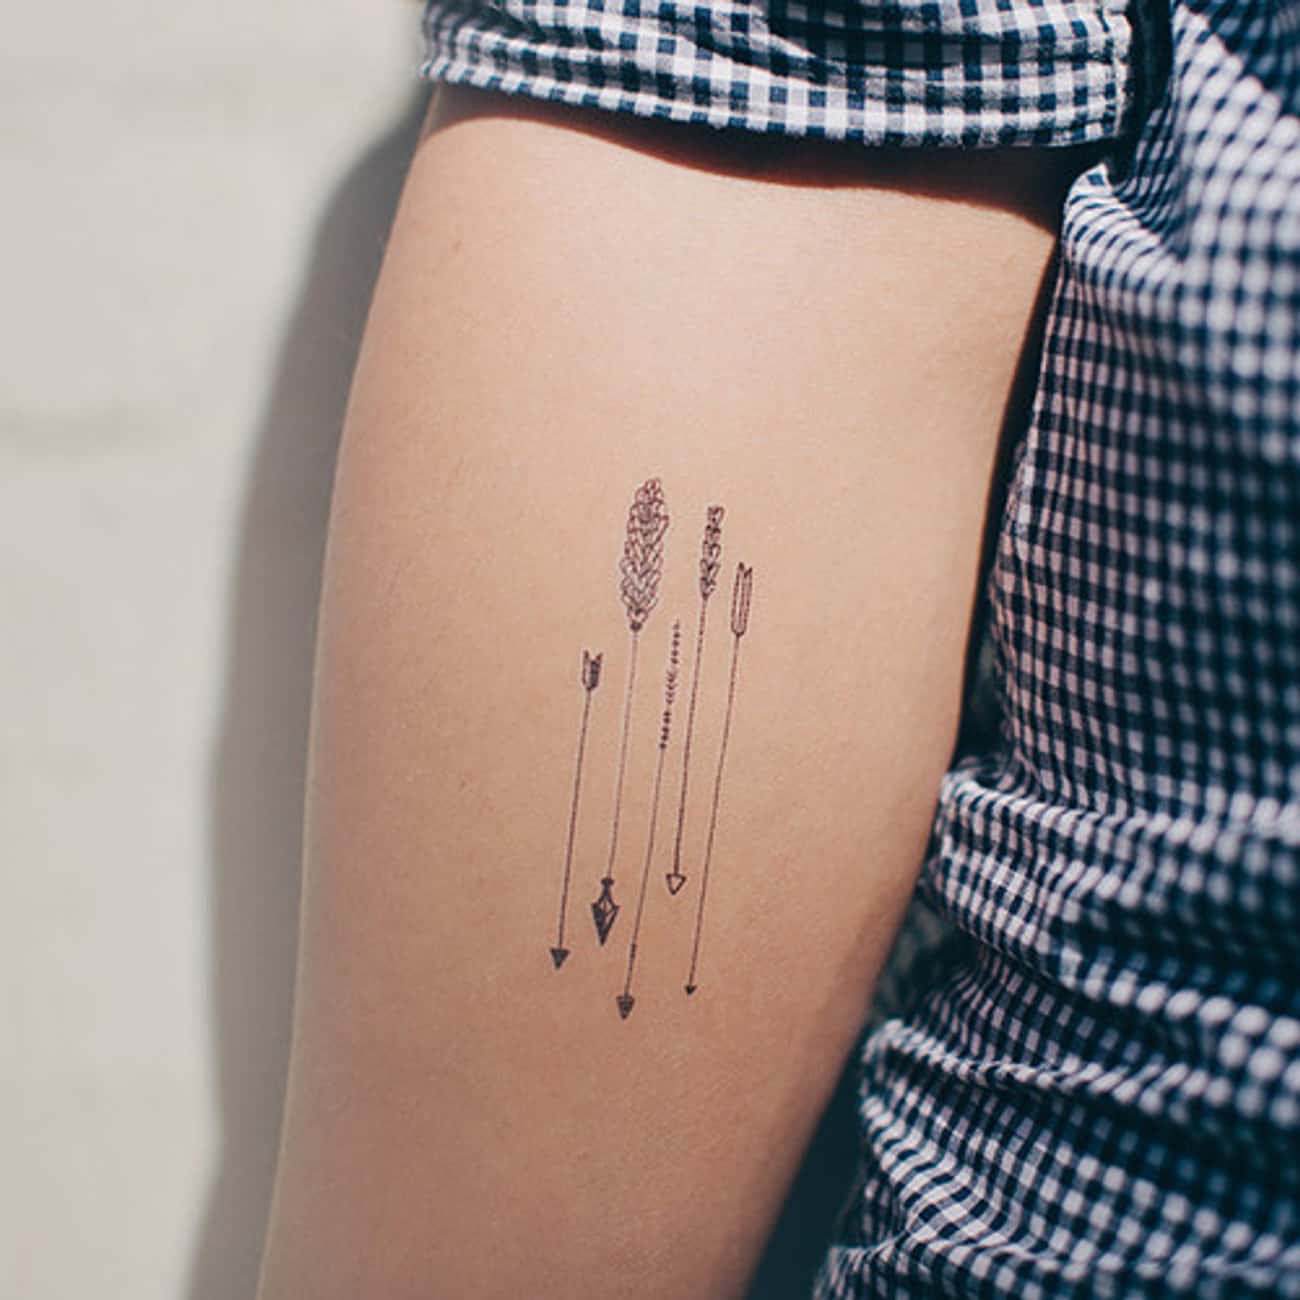 Detailed Arrow Tattoos